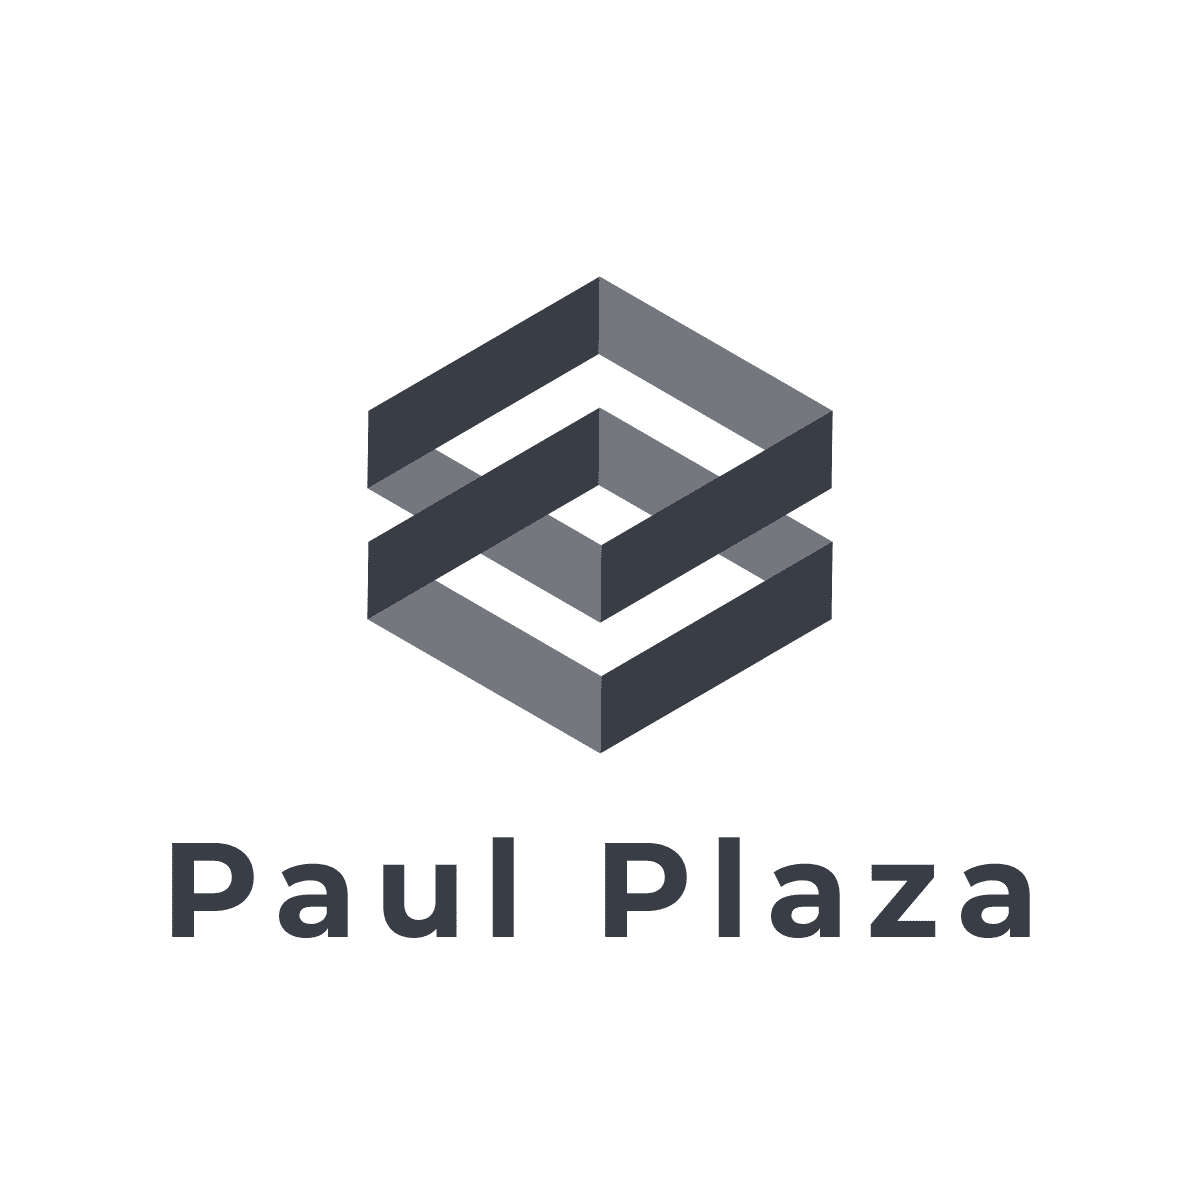 Paul Plaza